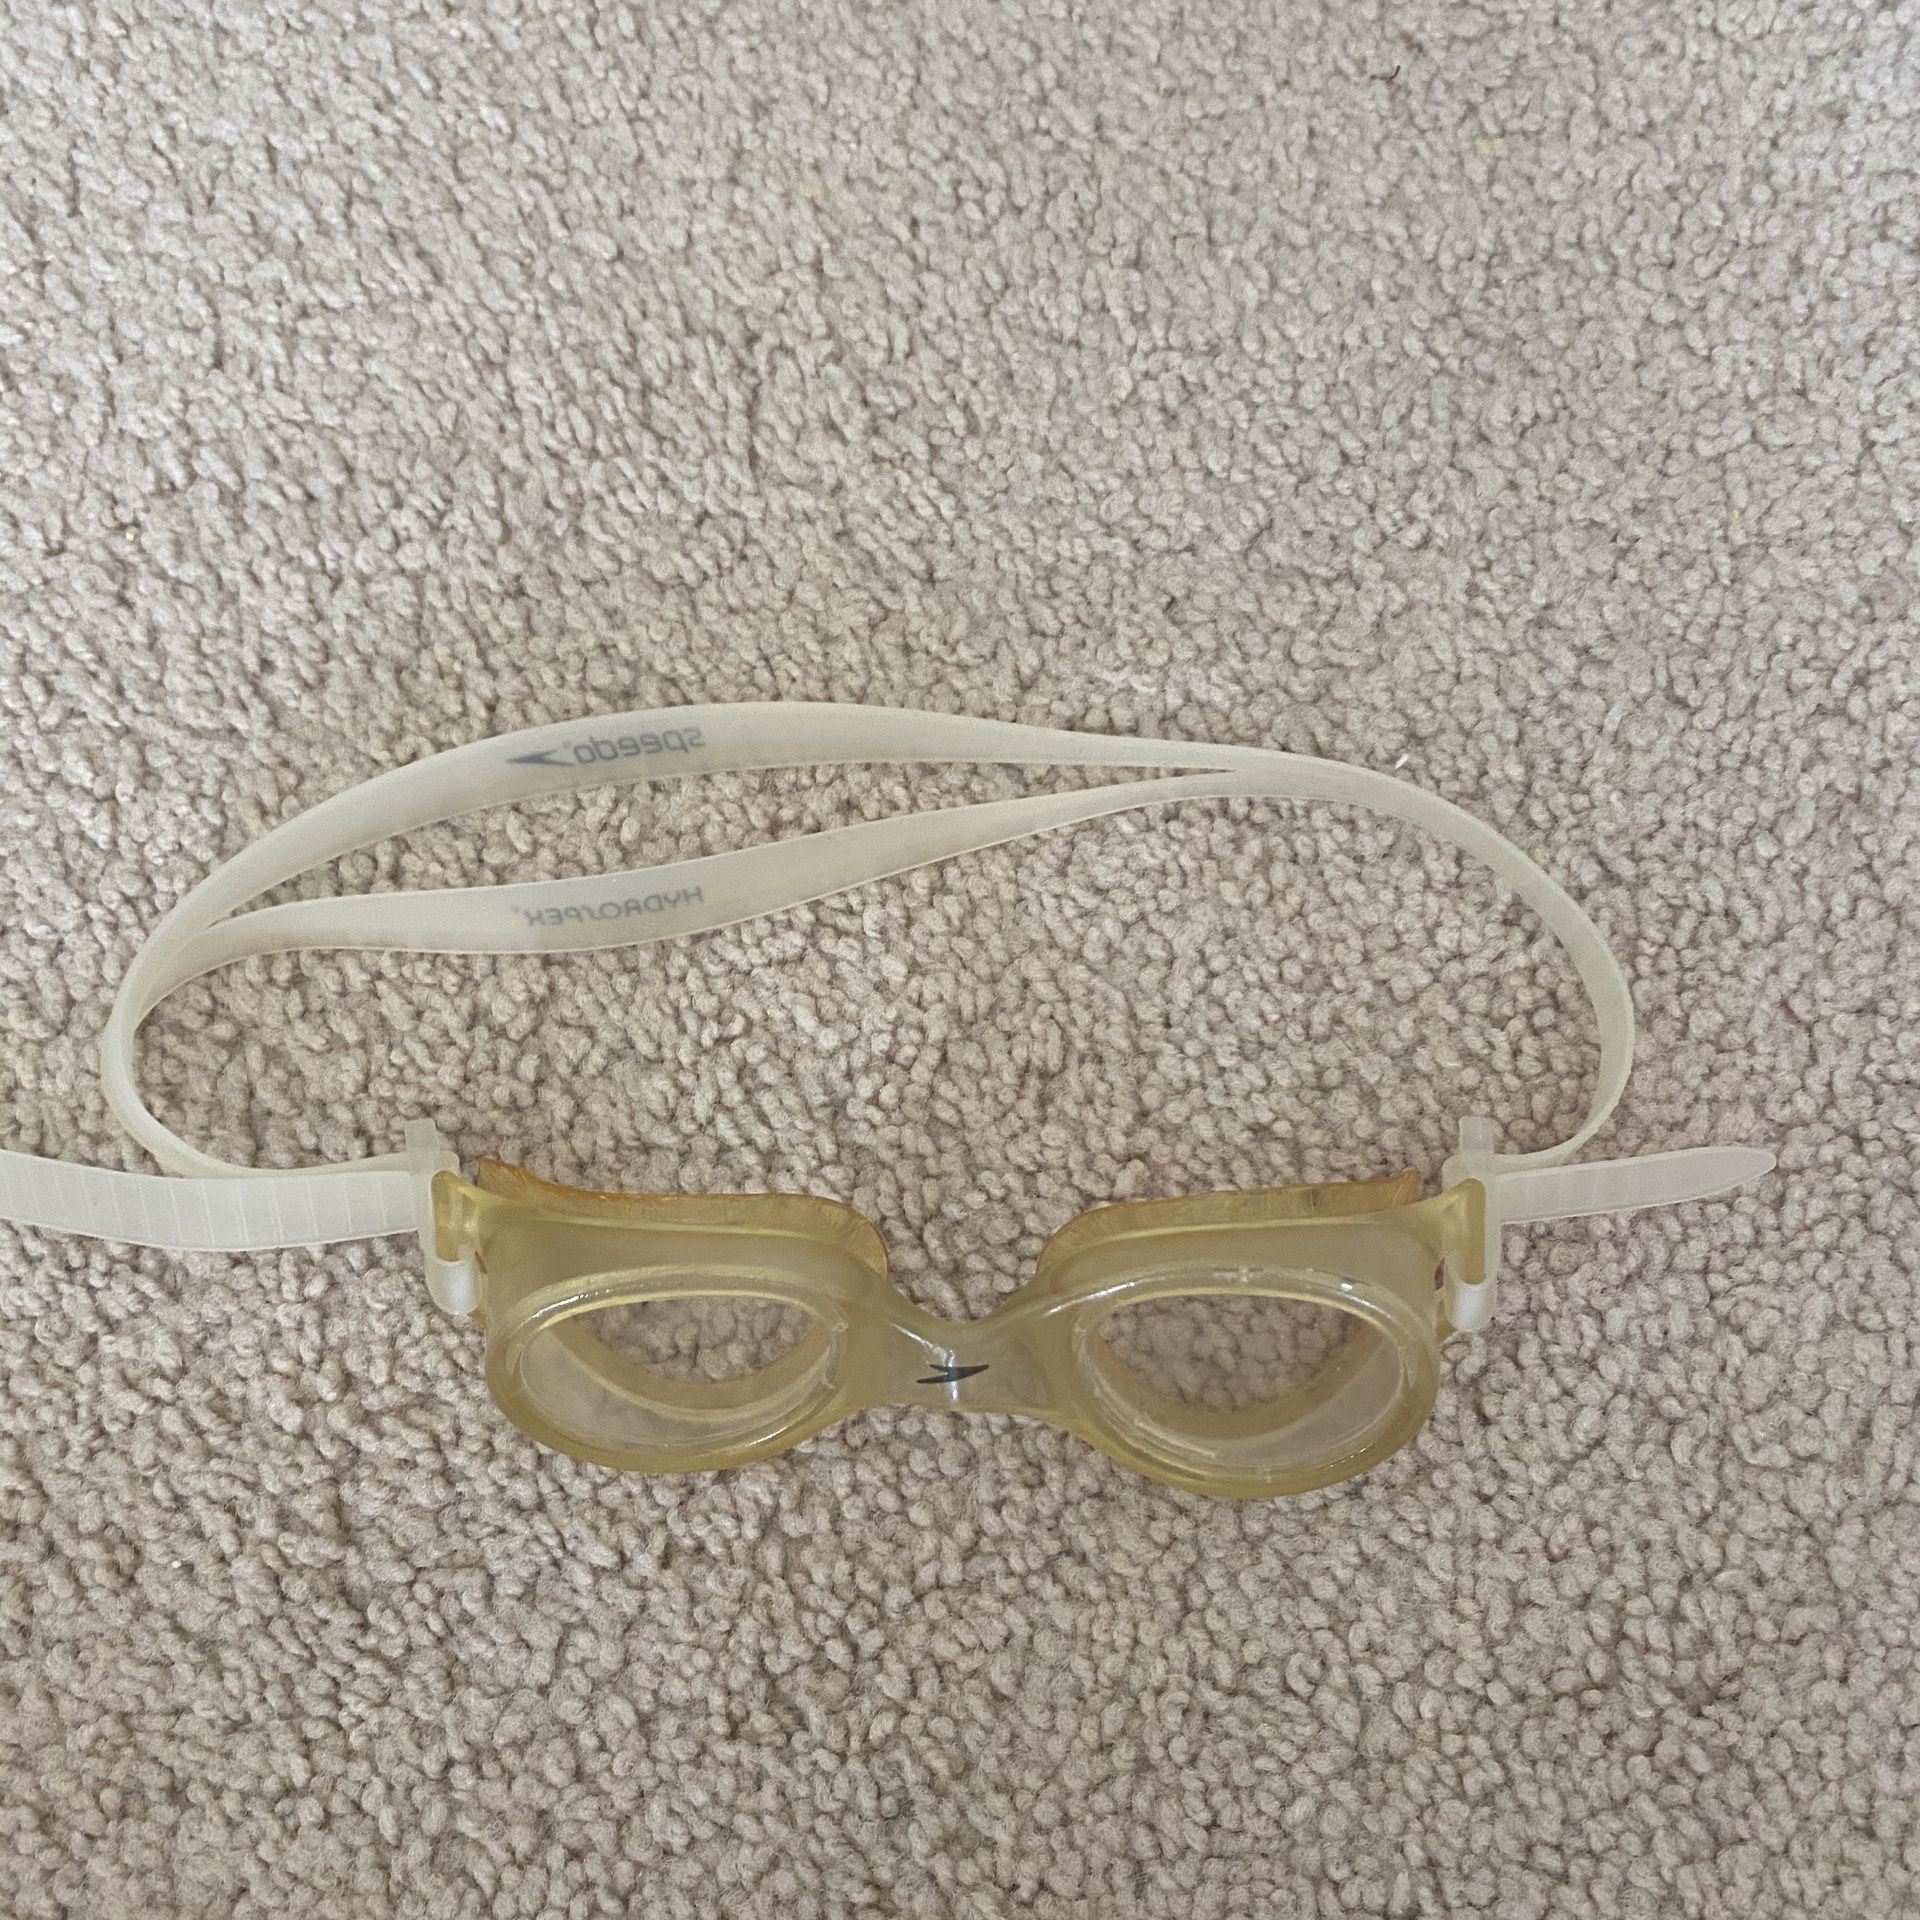 White Speedo goggles